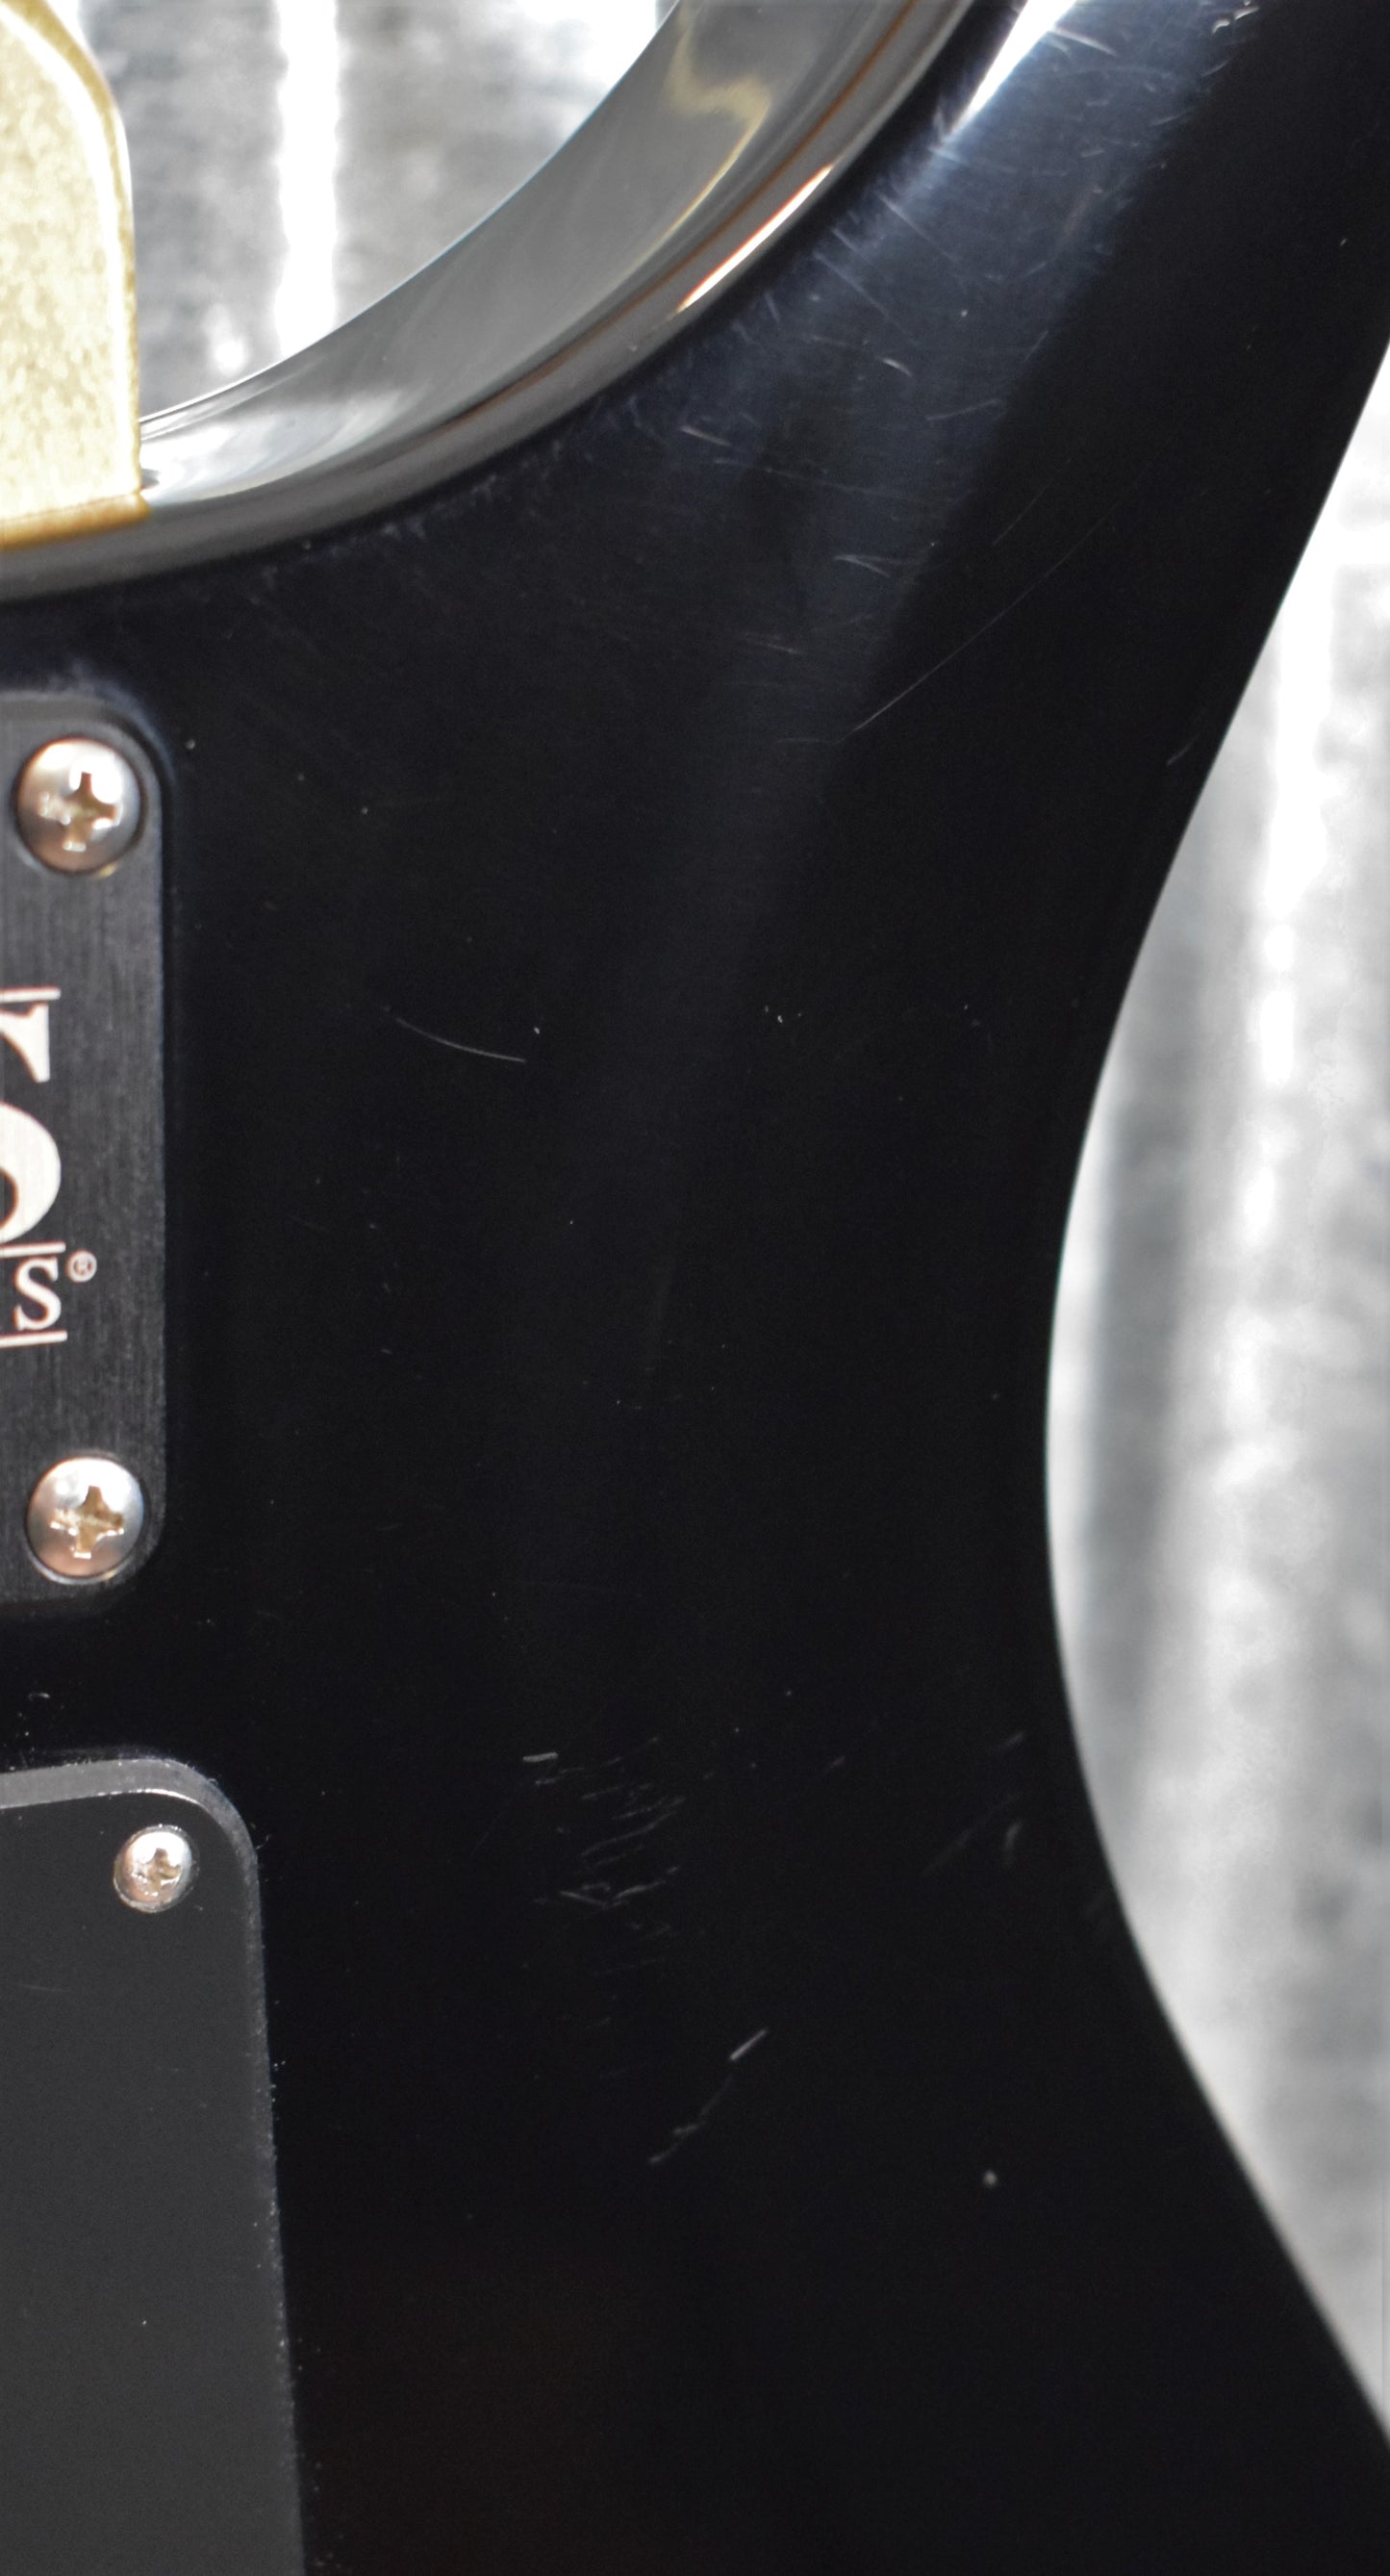 PRS Paul Reed Smith 2017 CE 24 Gray Black Smokewrap DiMarzio Guitar & Bag CE24 #2774 Used